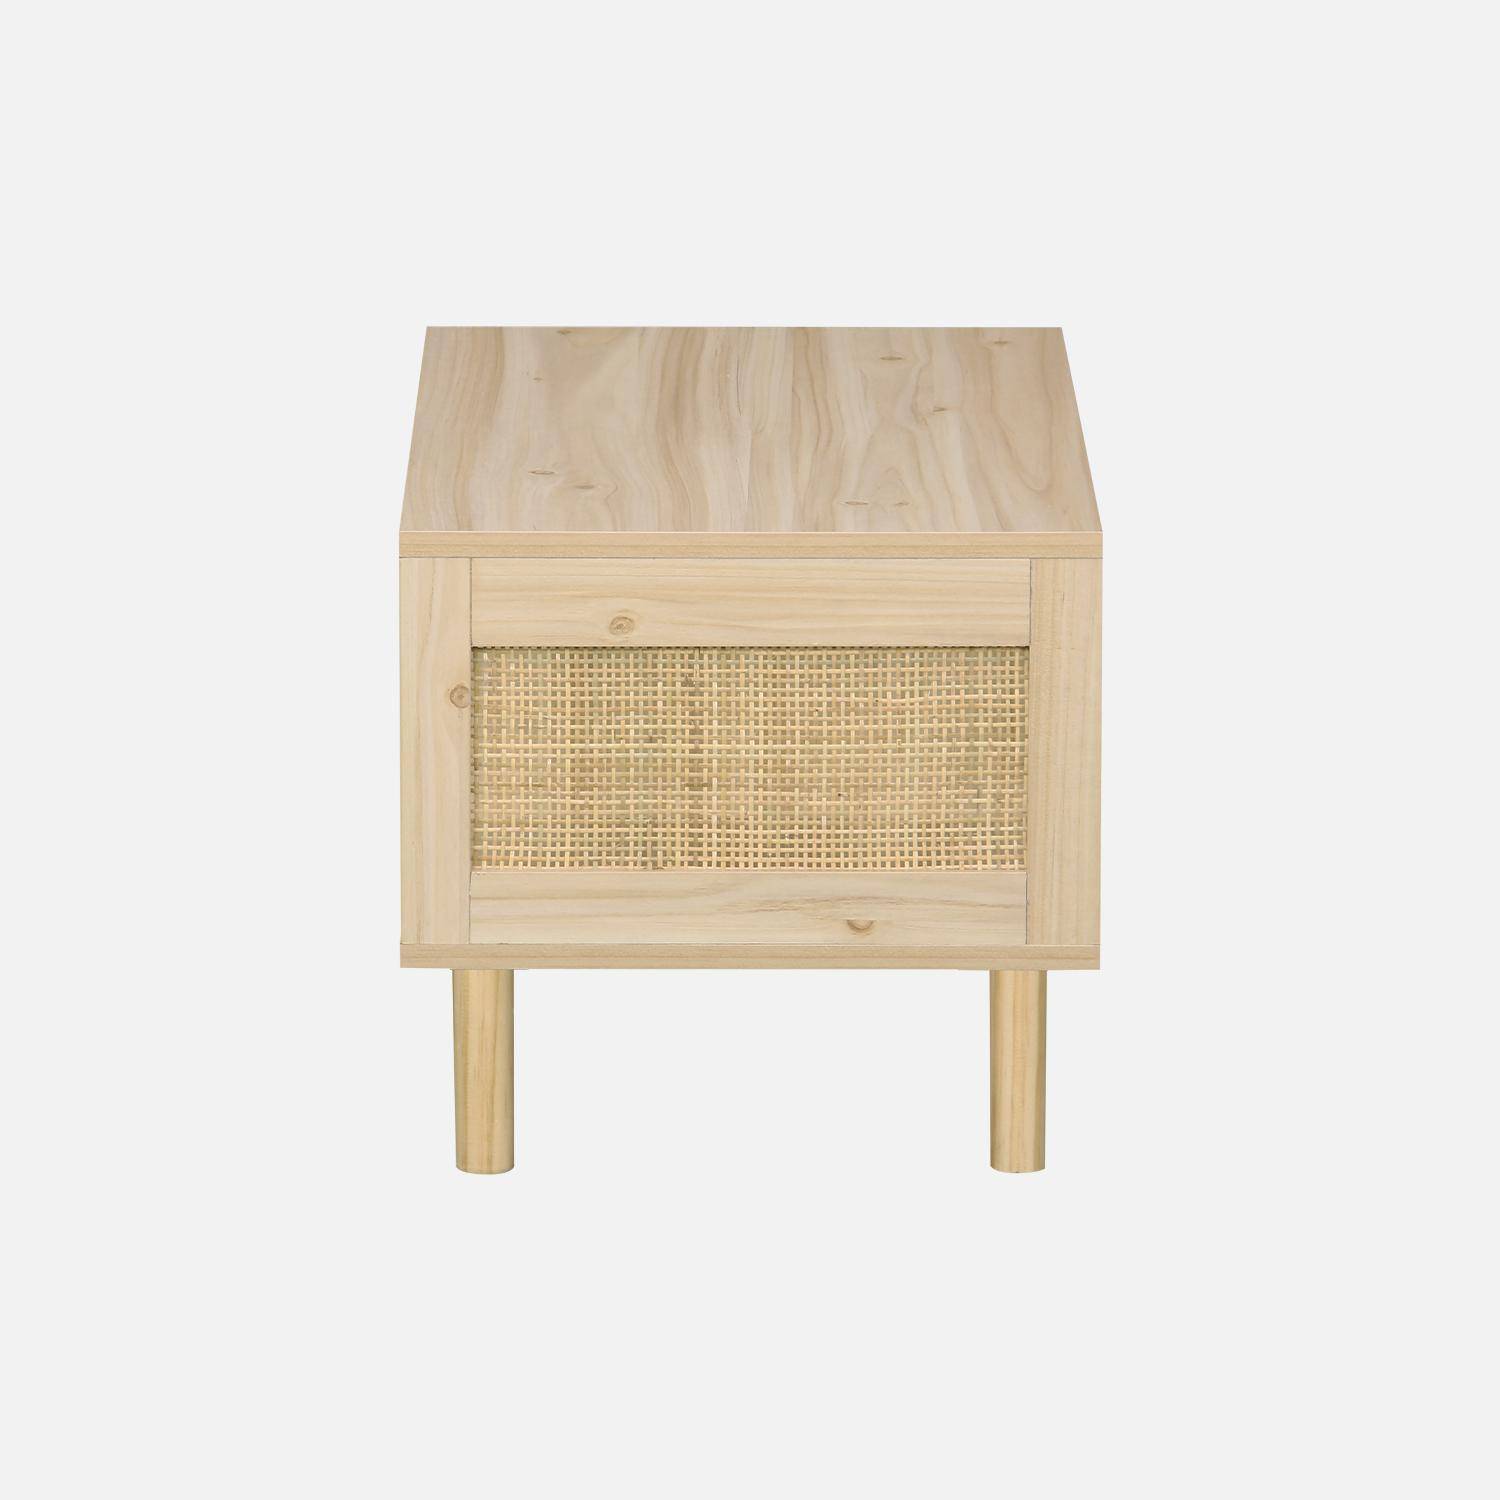 Woven rattan coffee table, 80x40x40cm, Camargue, Natural wood colour Photo5